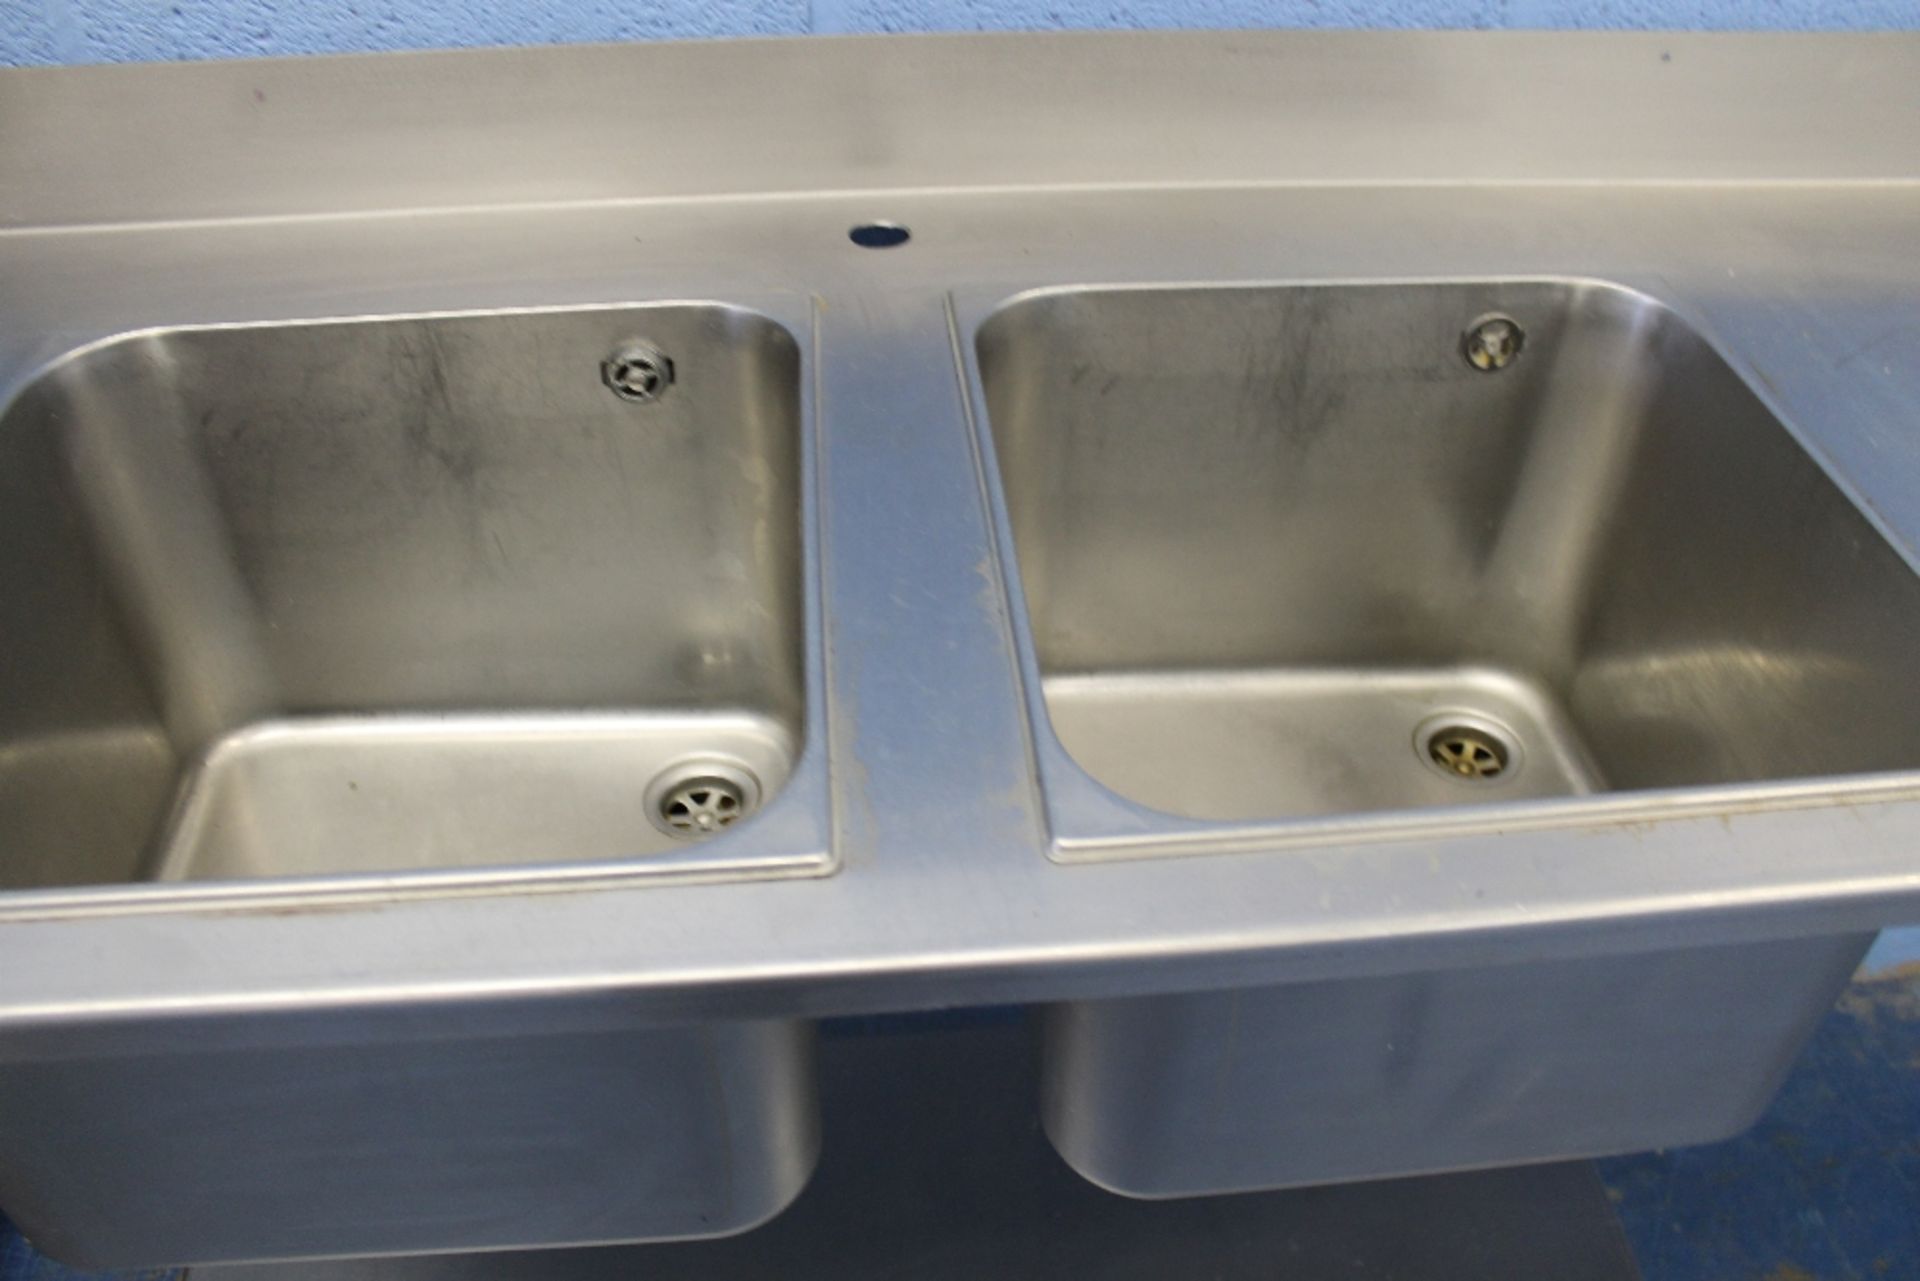 Stainless Steel Double Bowl Catering Sink – splash back -  NO VAT W230cm x H90cm x D60cm - Image 2 of 2